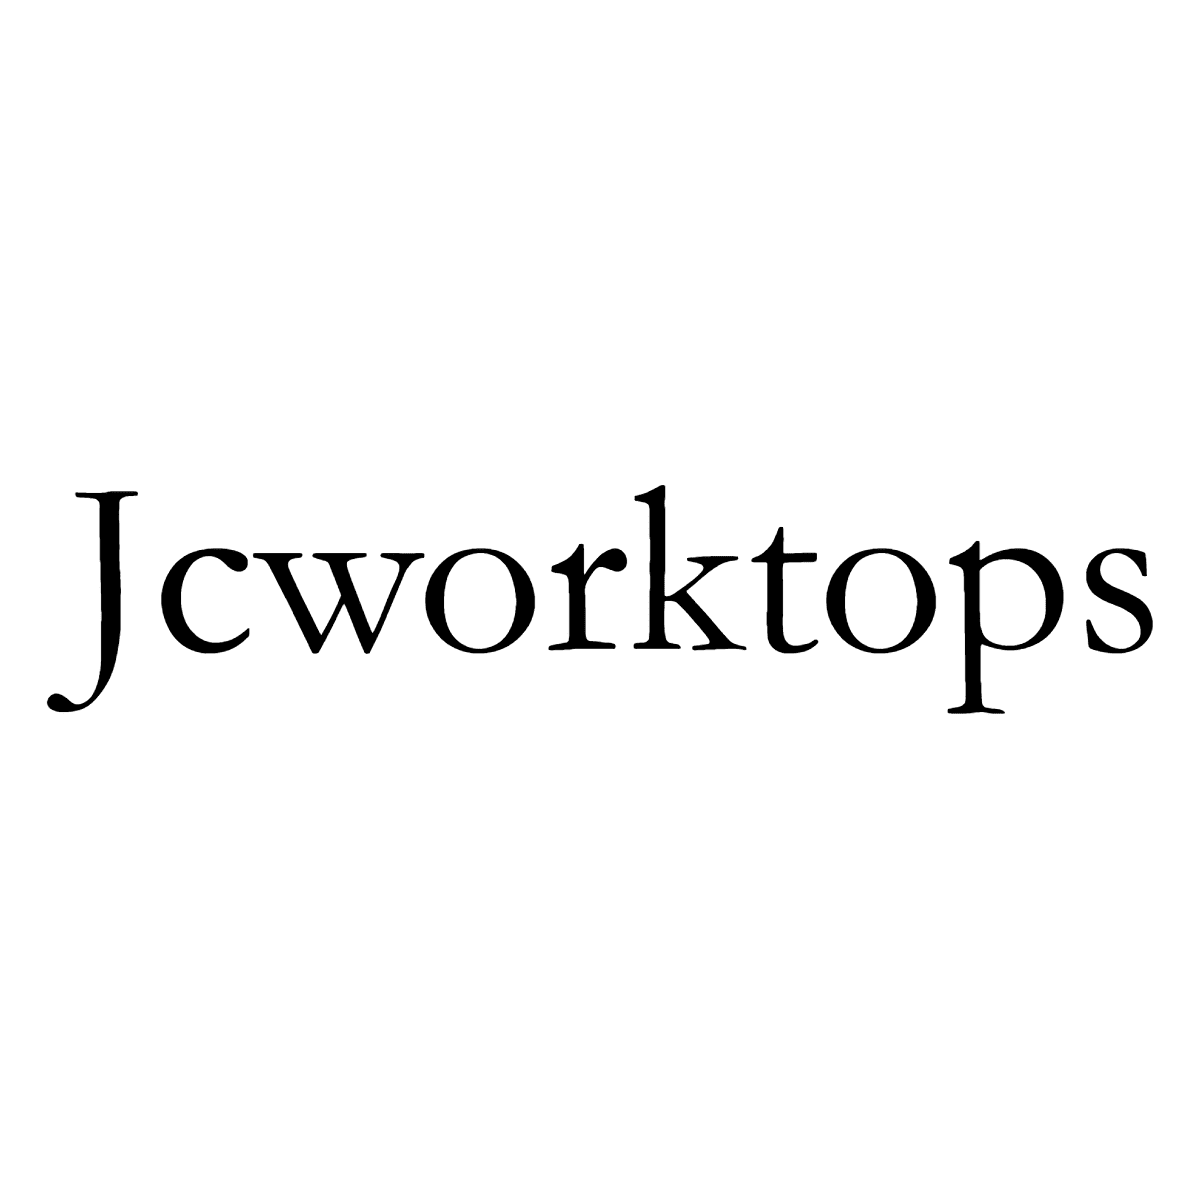 Jcworktops - Rotherham, South Yorkshire S61 1SG - 07708 461225 | ShowMeLocal.com